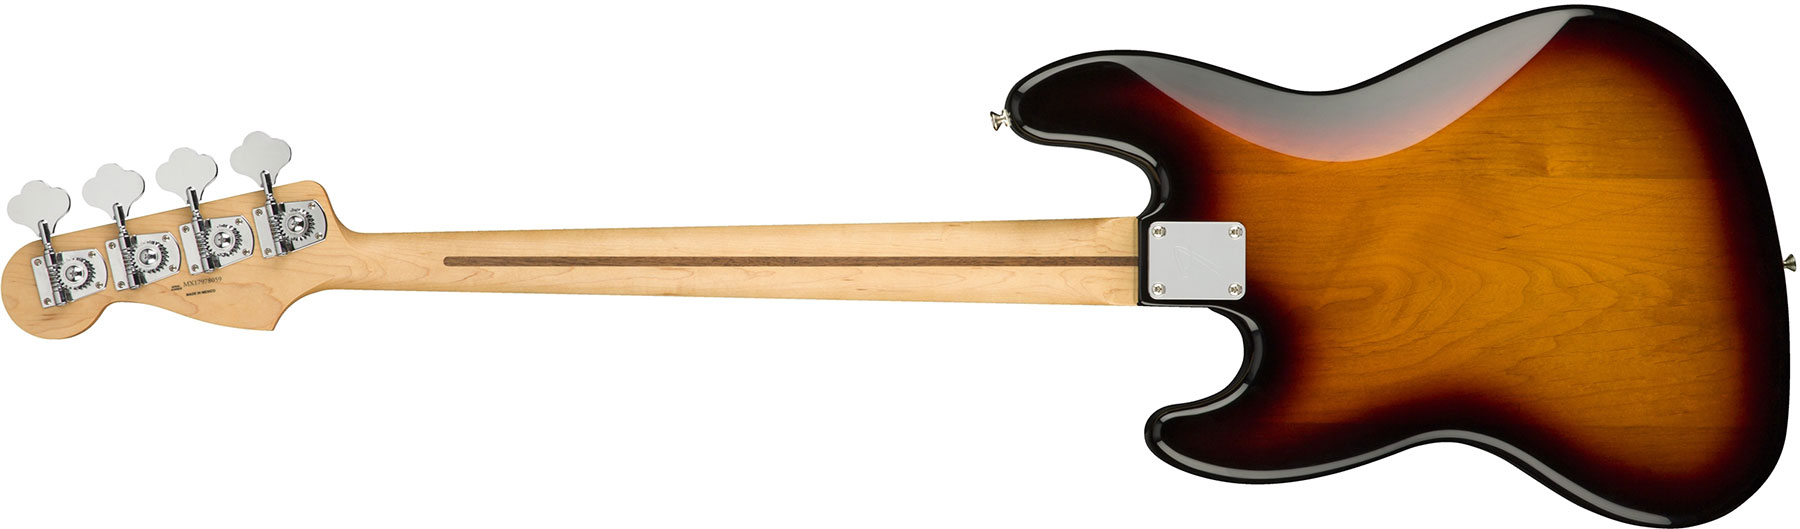 Fender Jazz Bass Player Fretless Mex Pf - 3-color Sunburst - Basse Électrique Solid Body - Variation 1